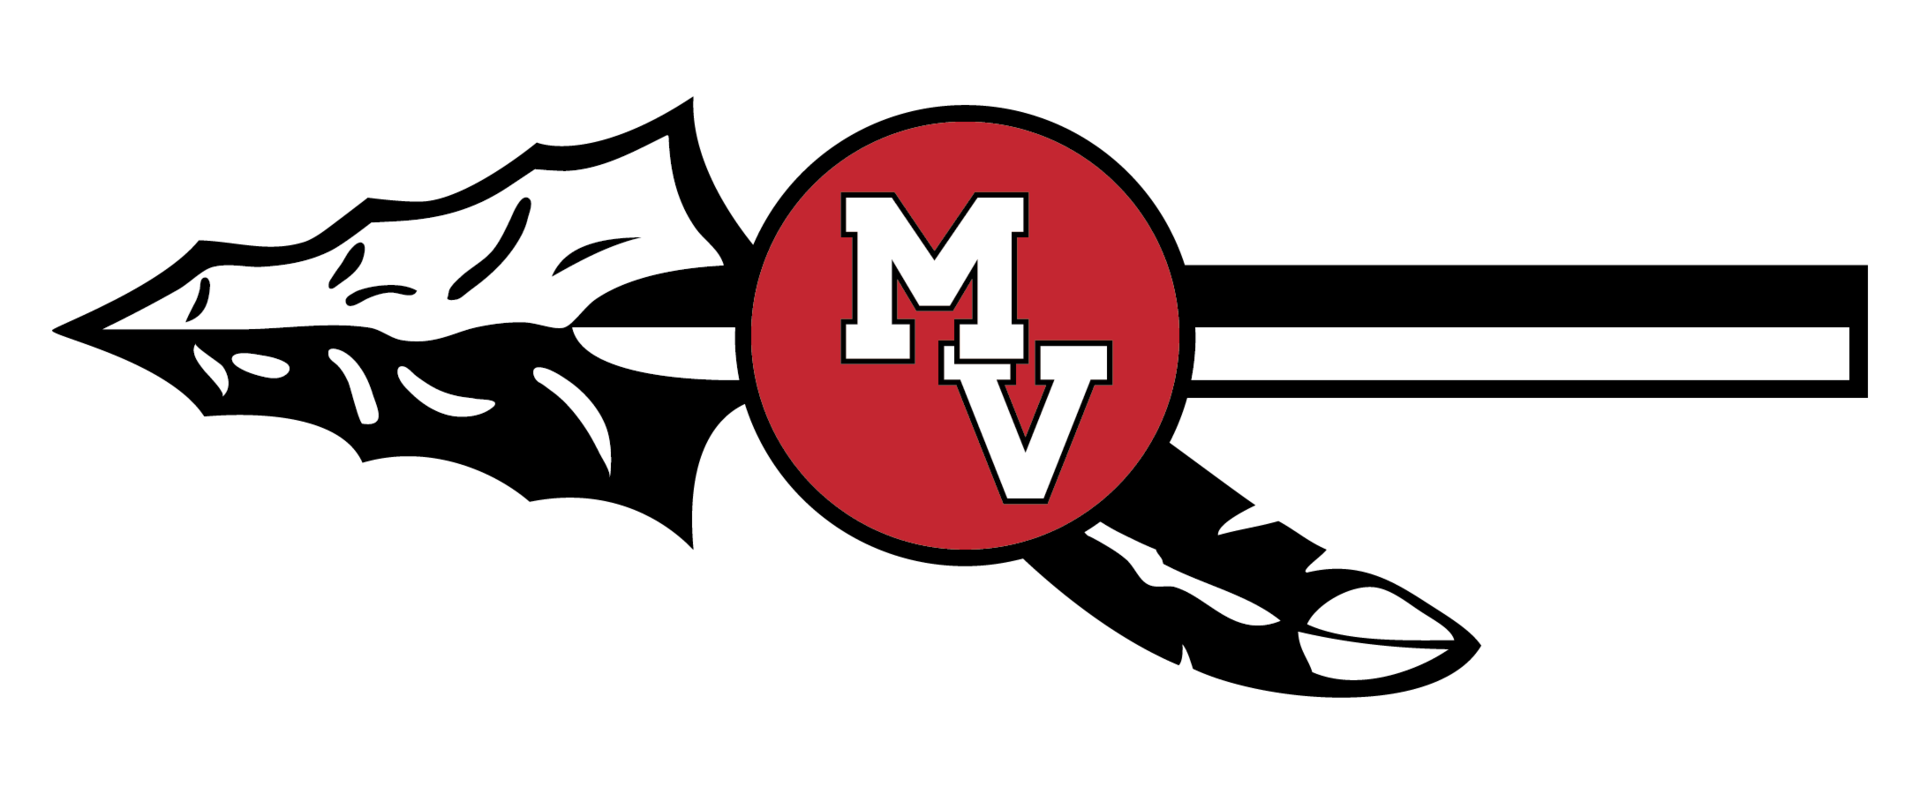 MS Valley logo